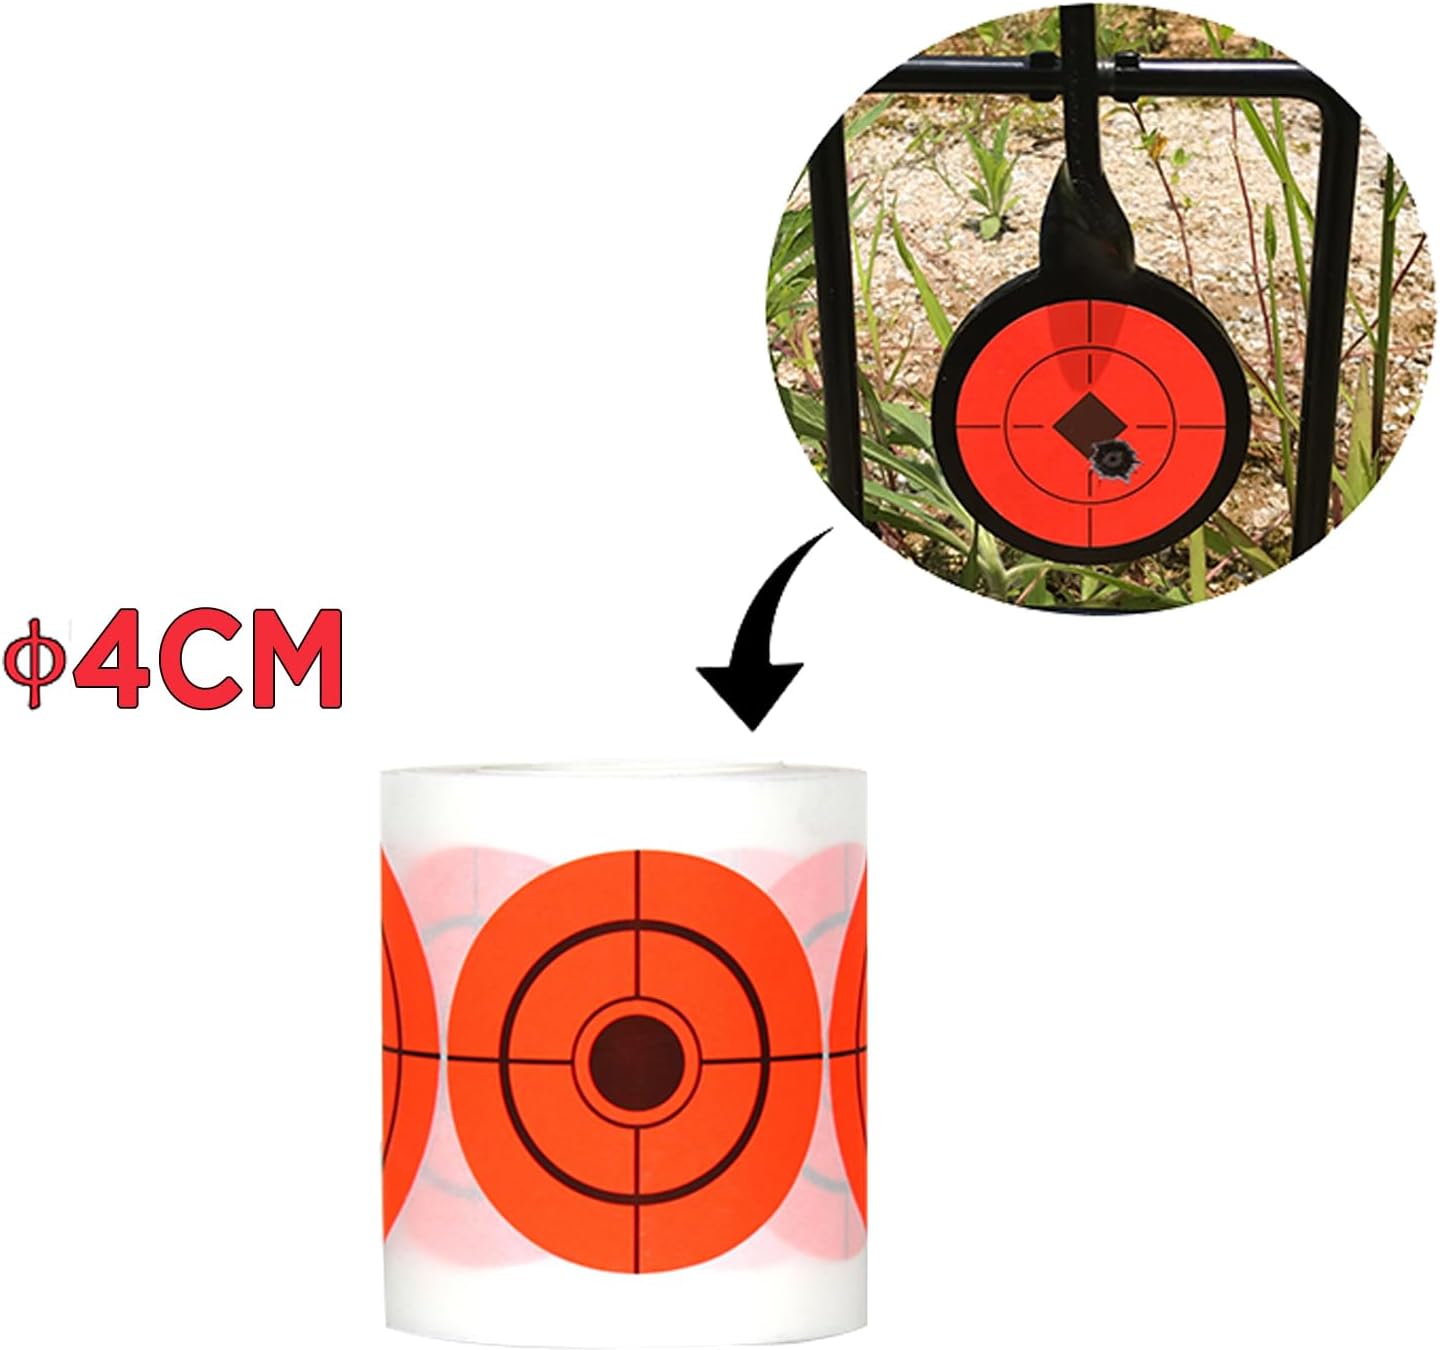 Atflbox 500 Pcs Pack Stick on Targets 4 cm Target Paster Paper Stickers for Shooting Orange